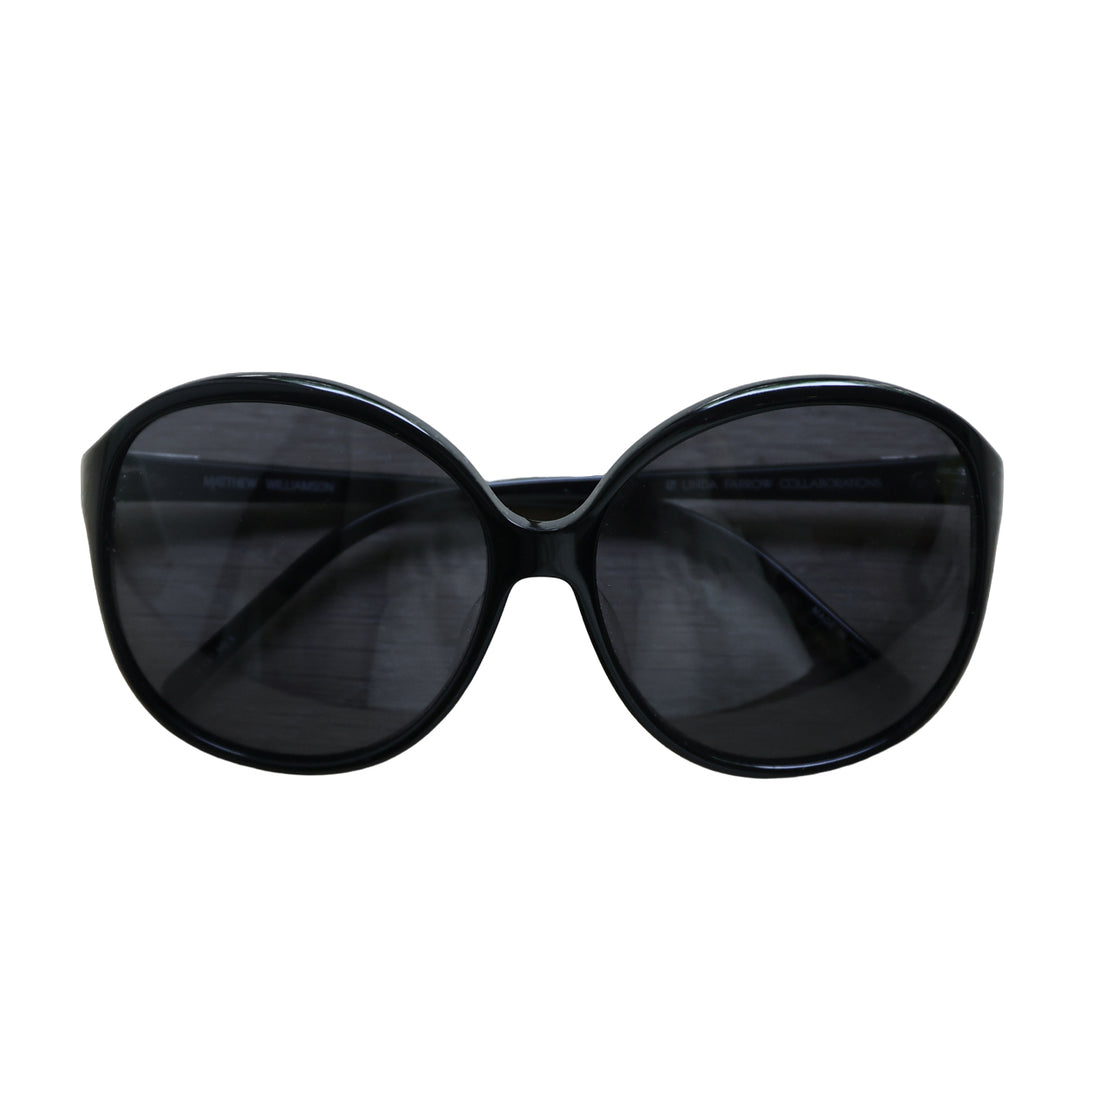 Matthew Williamson x Linda Farrow Oversized Black Sunglasses